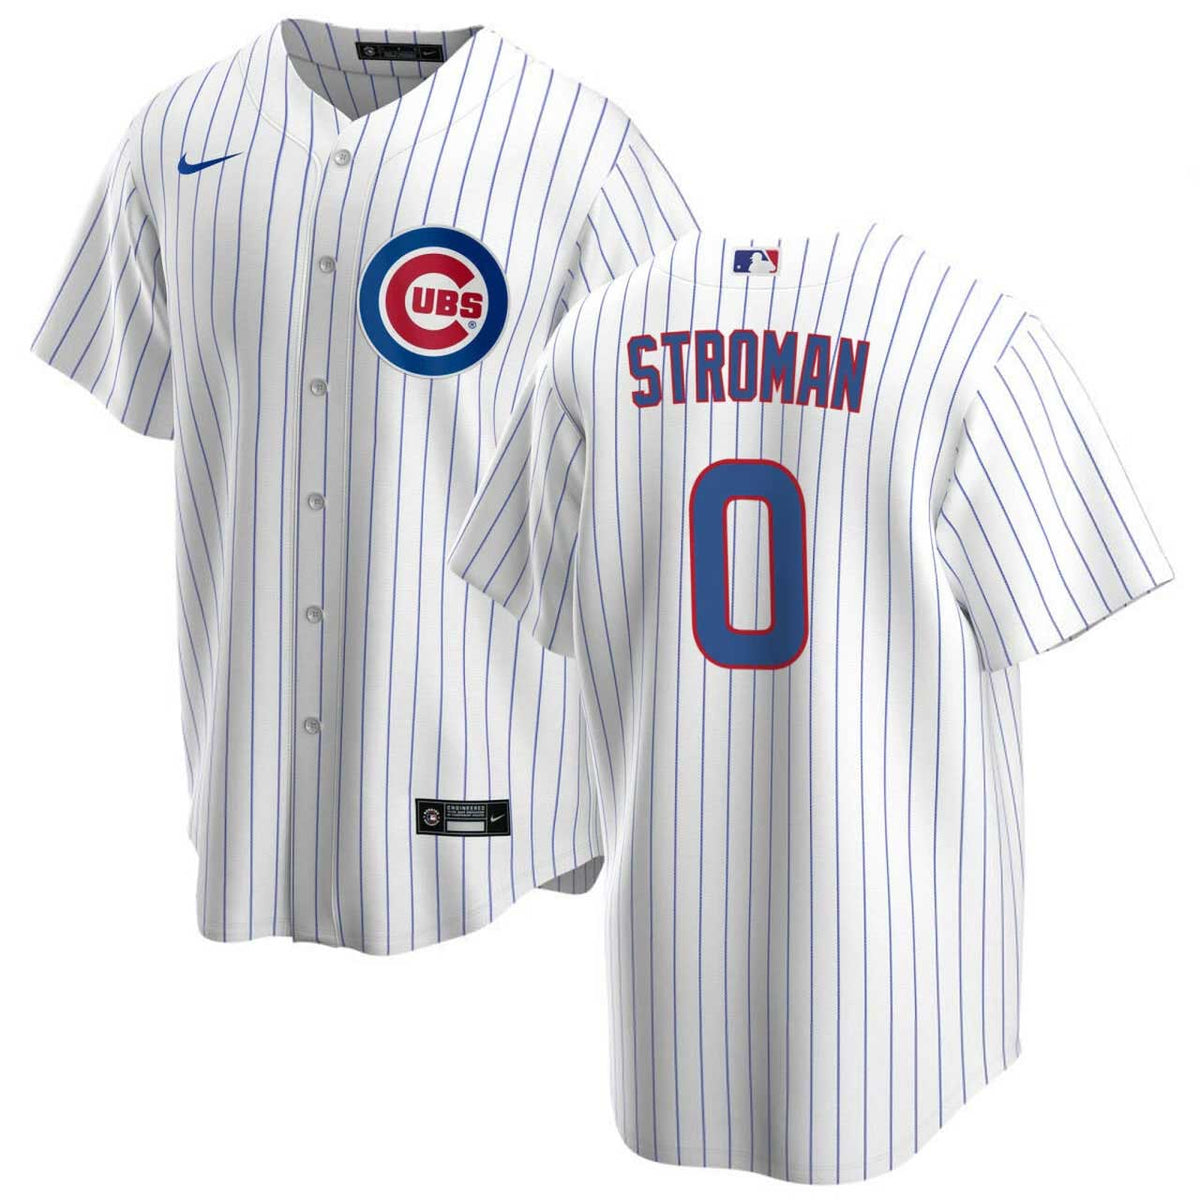 Stro To Slide Marcus Stroman Chicago Cubs Shirt